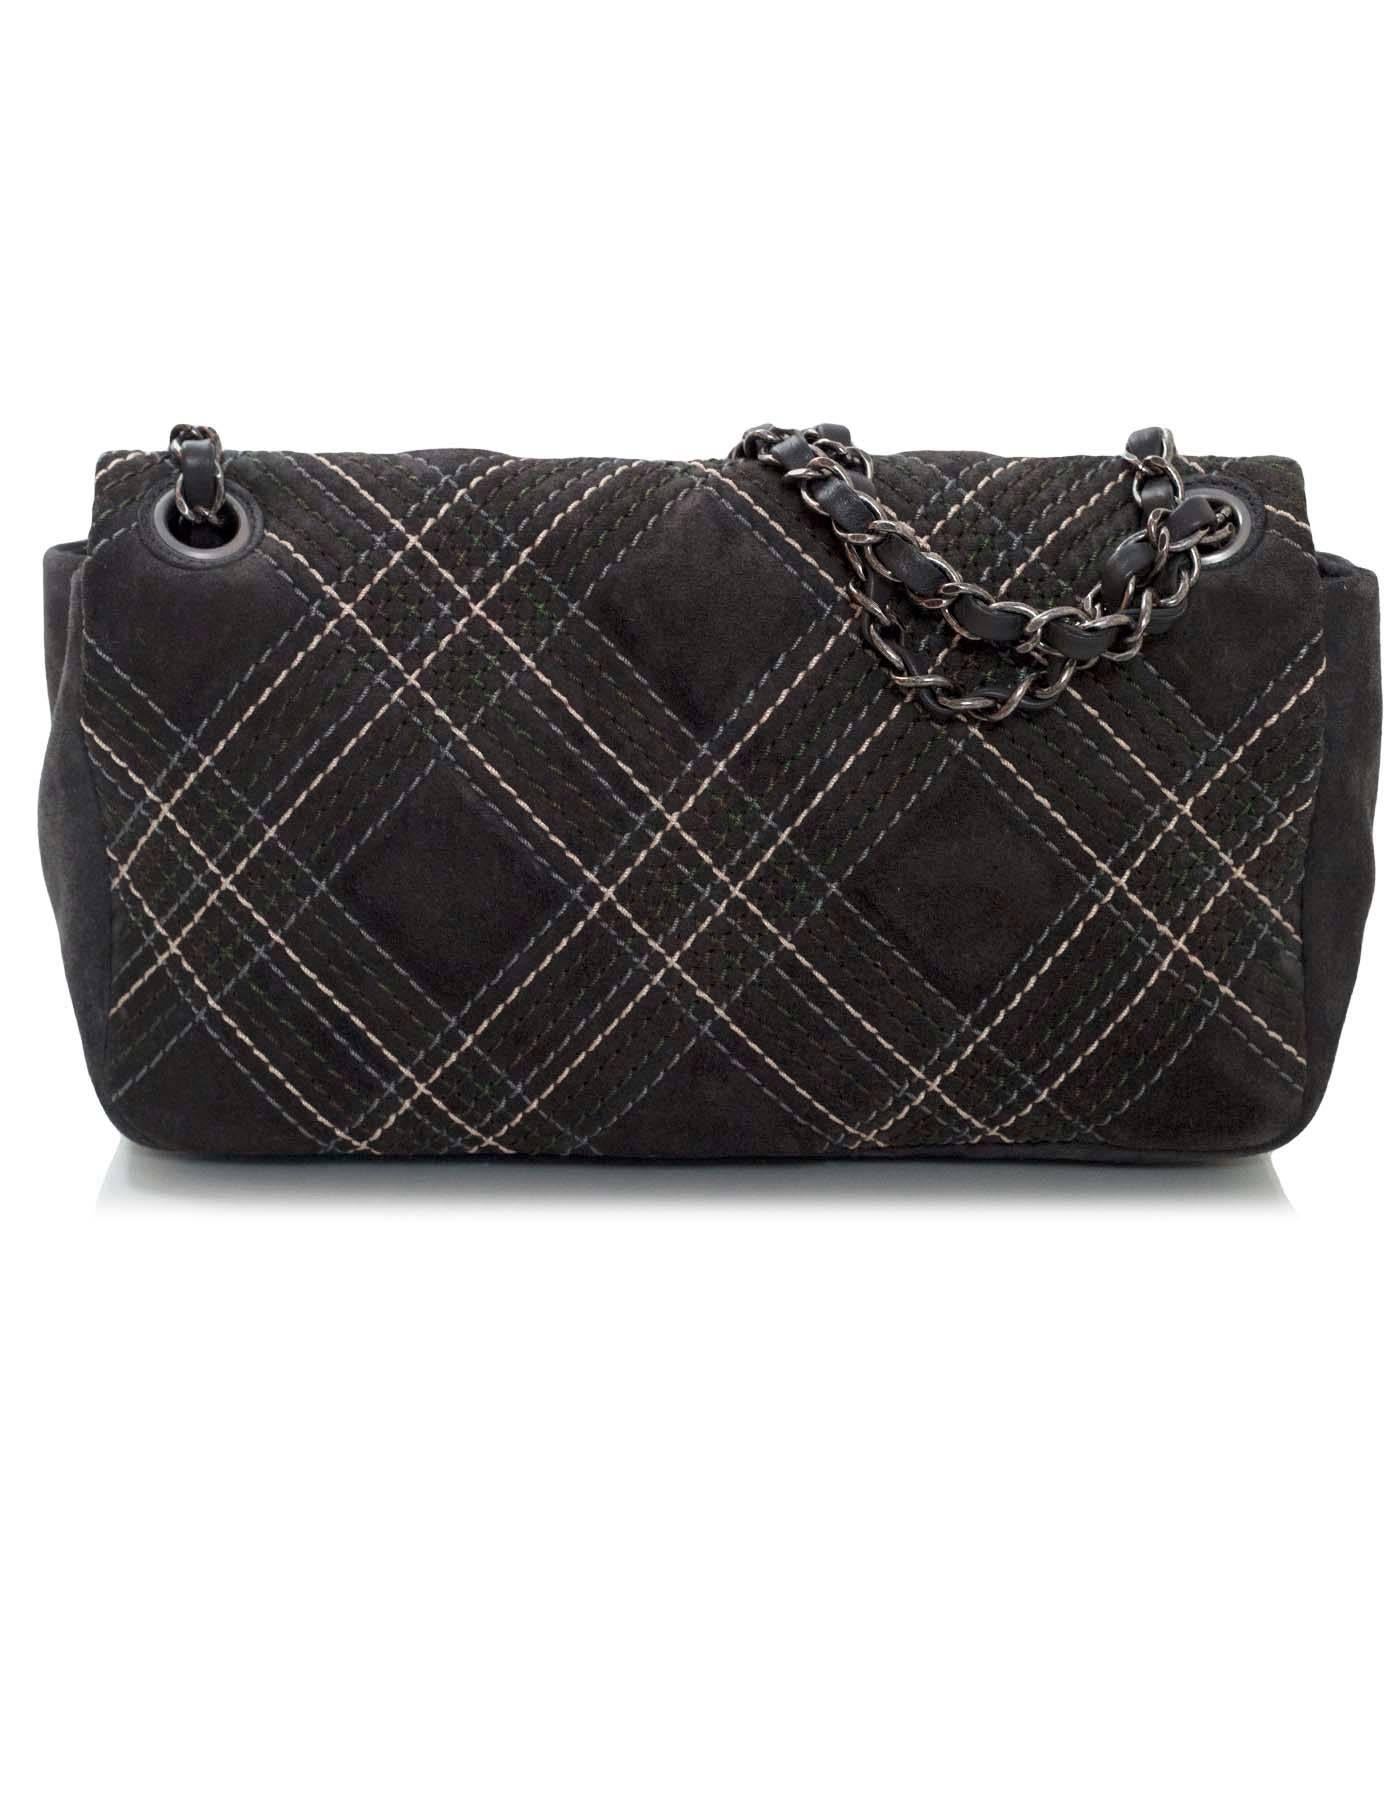 Black Chanel '13 Grey Suede Paris/Edinburg Saltire Stitch Flap Bag with Auth Card, Box